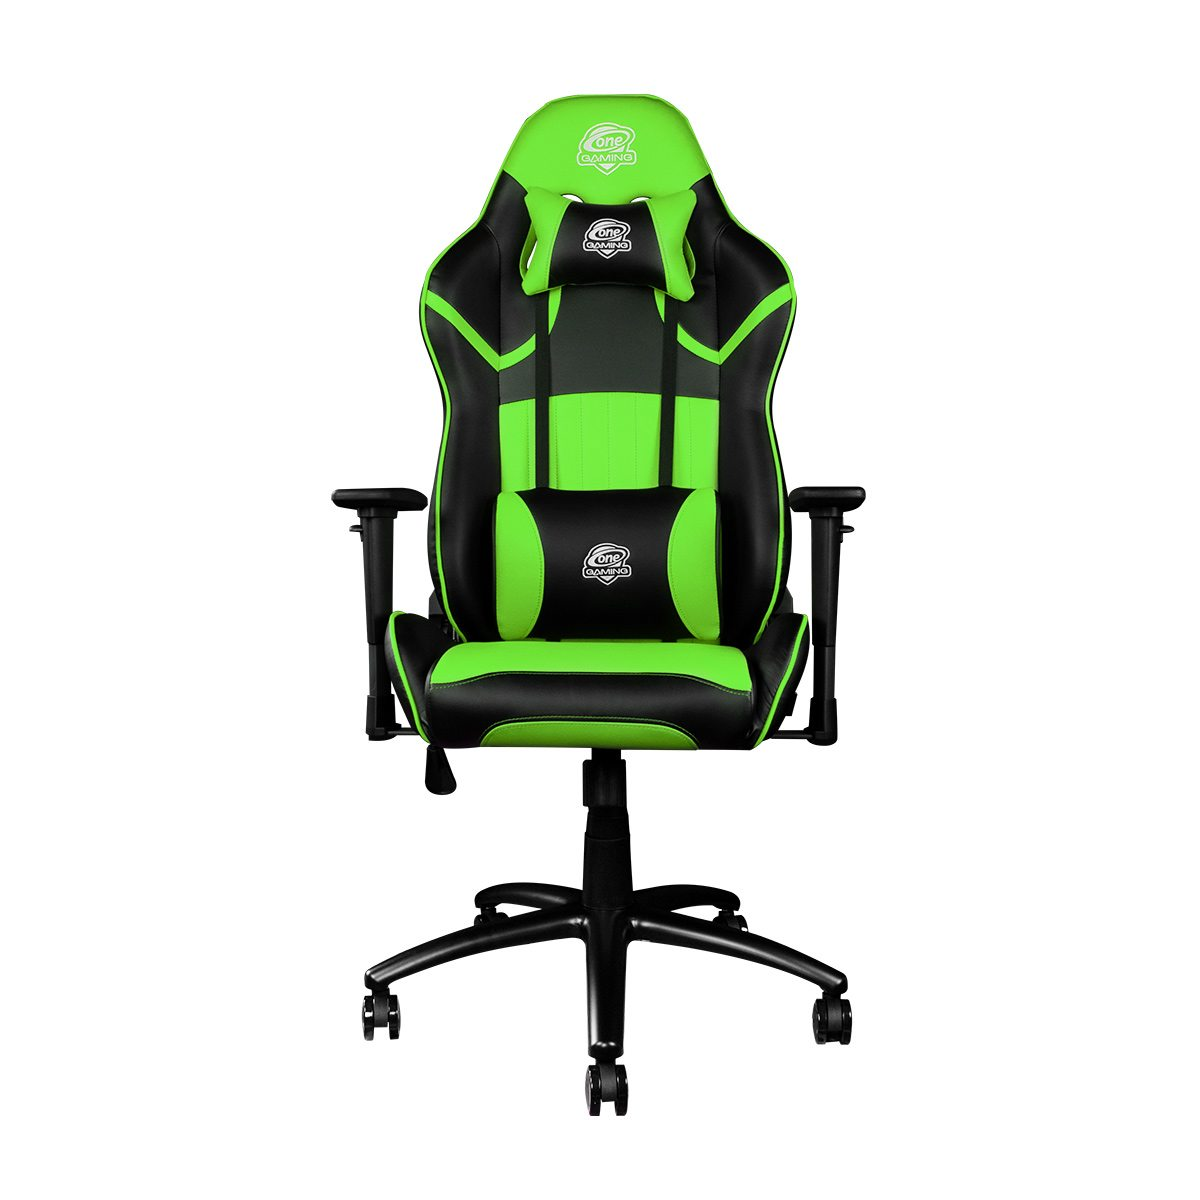 ONE GAMING Chair Pro grün schwarz - Gaming Stuhl, Green